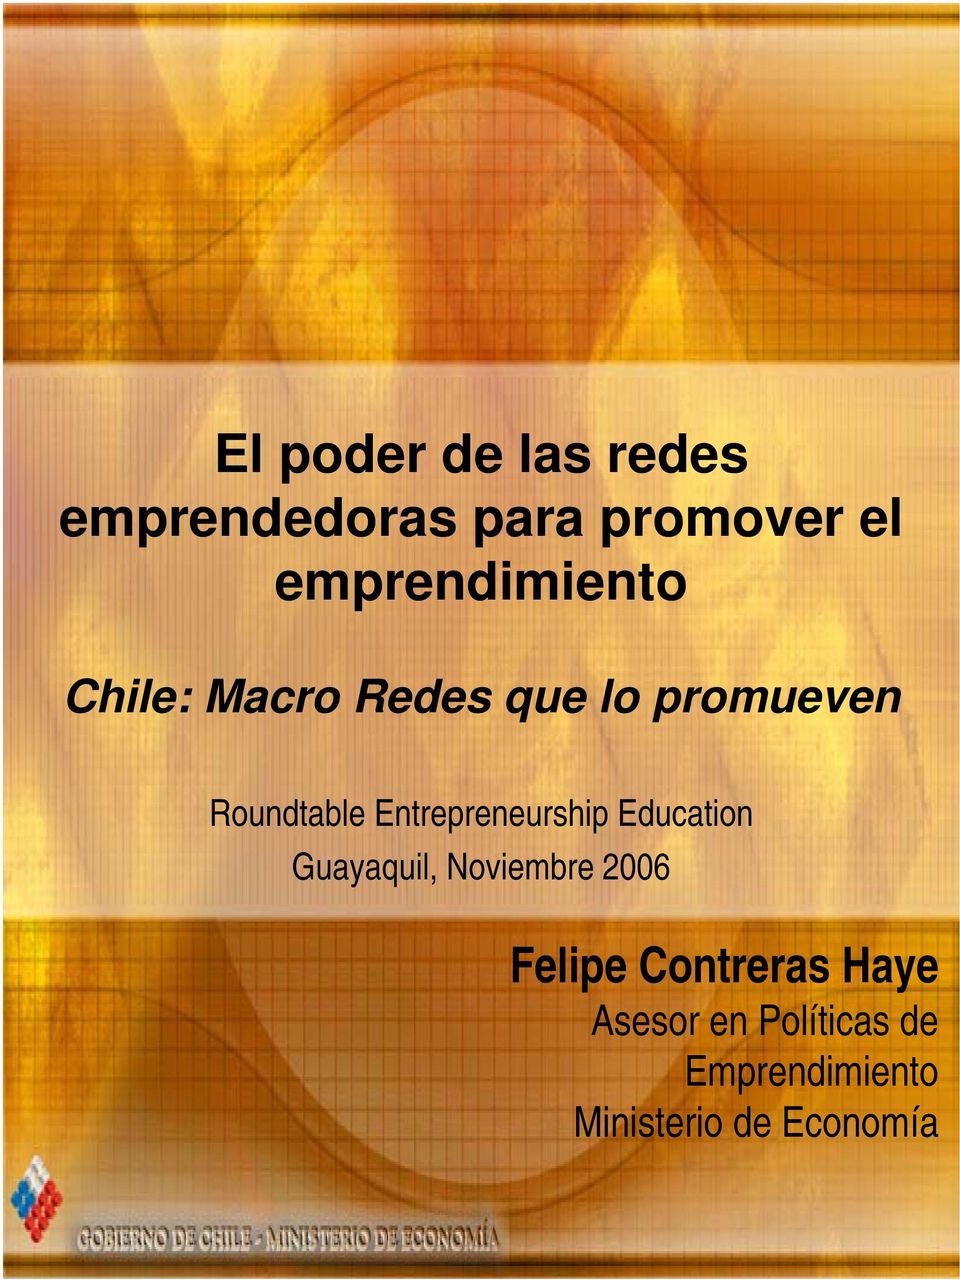 Entrepreneurship Education Guayaquil, Noviembre 2006 Felipe